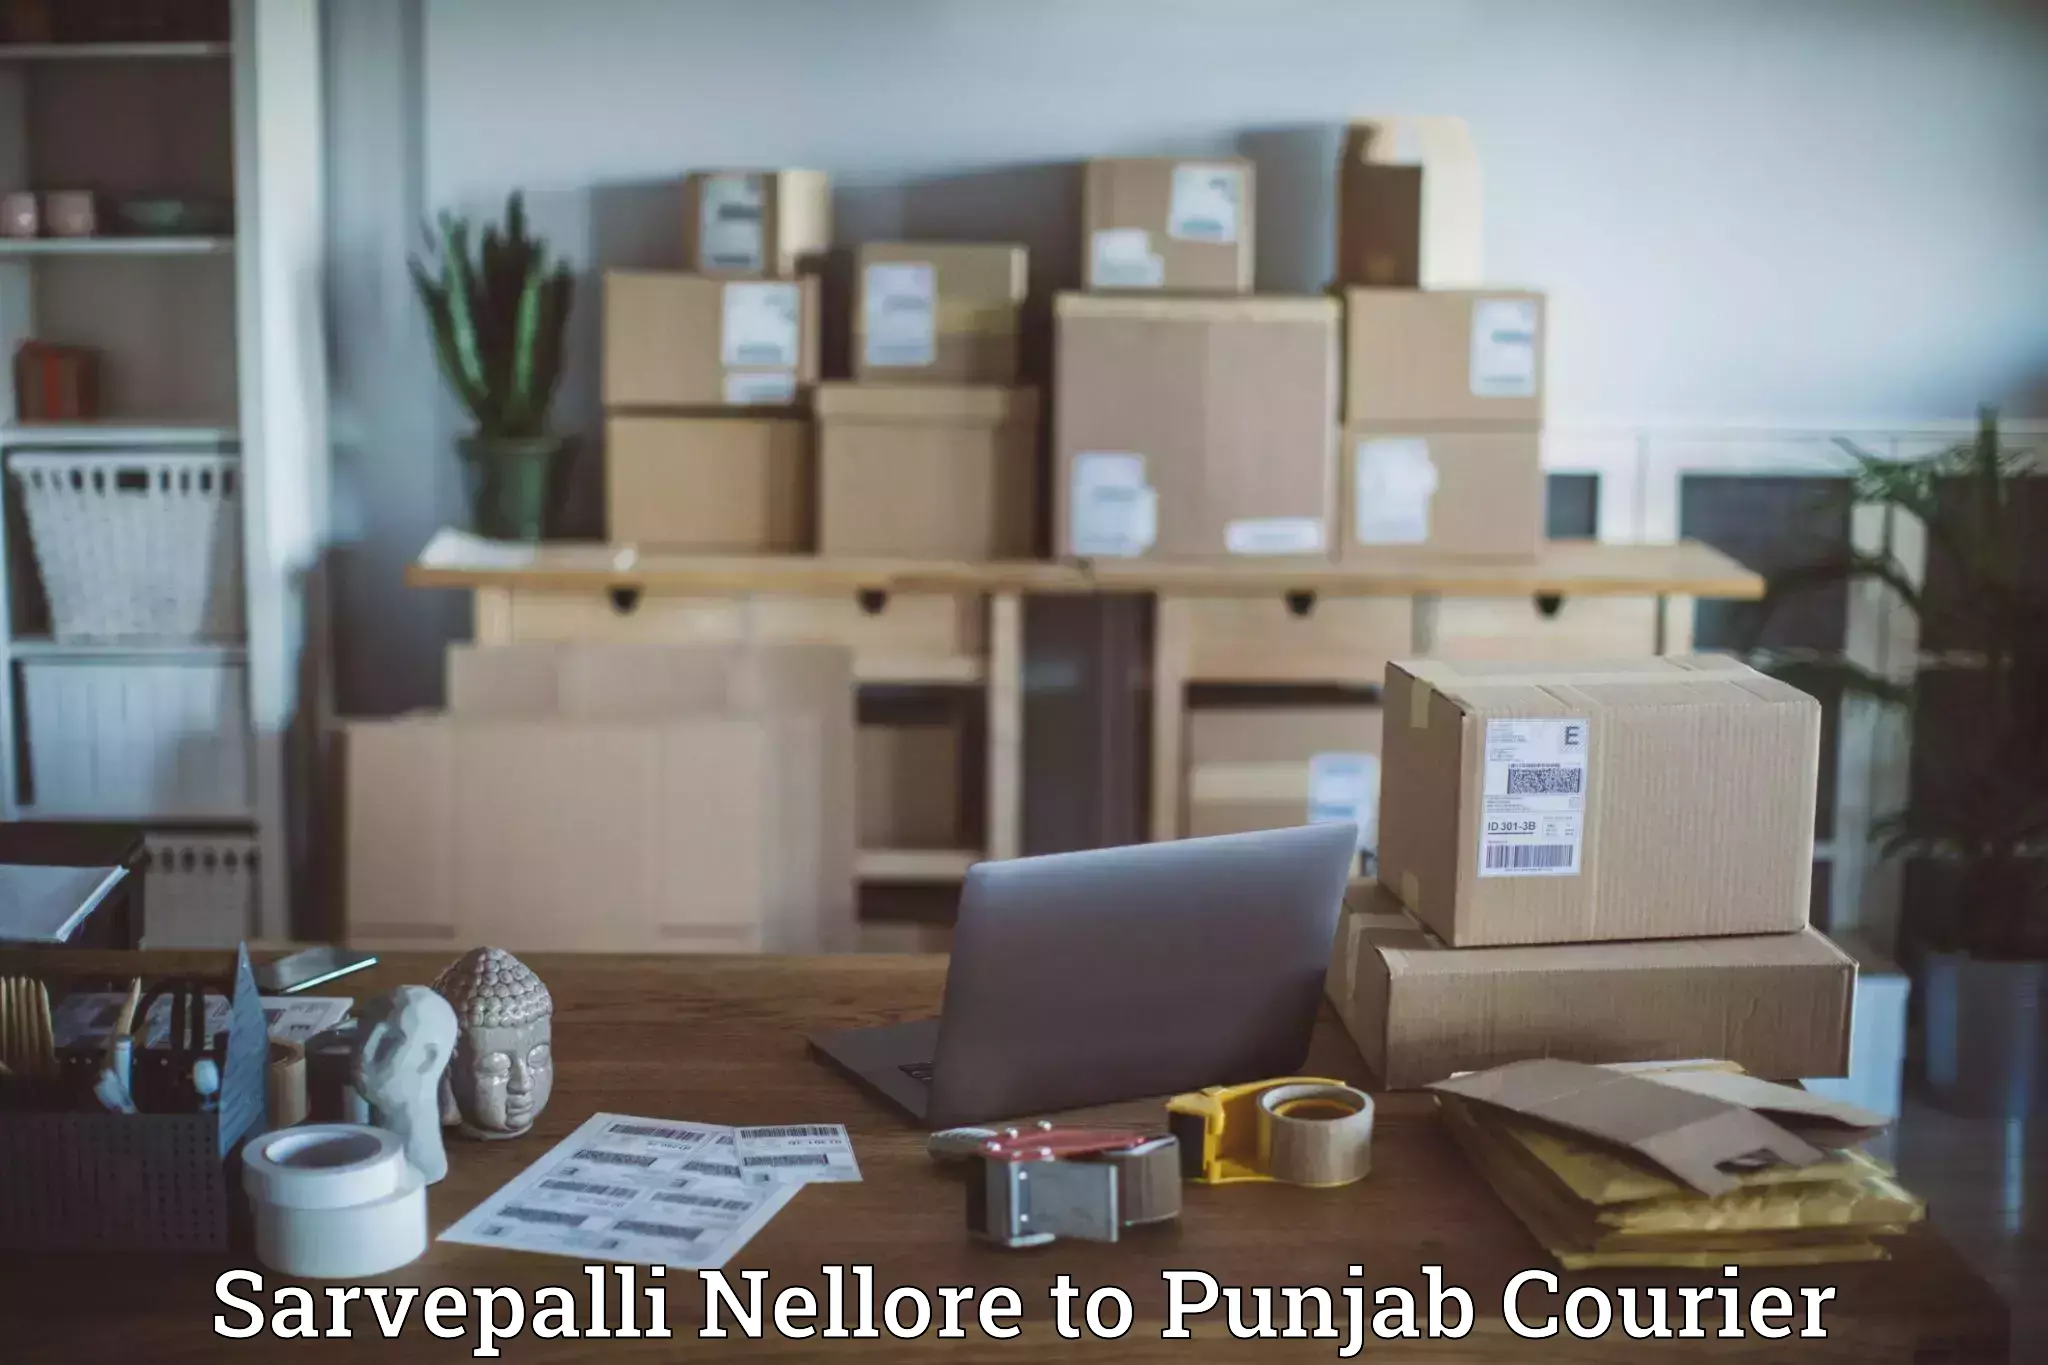 Premium courier solutions Sarvepalli Nellore to Talwara